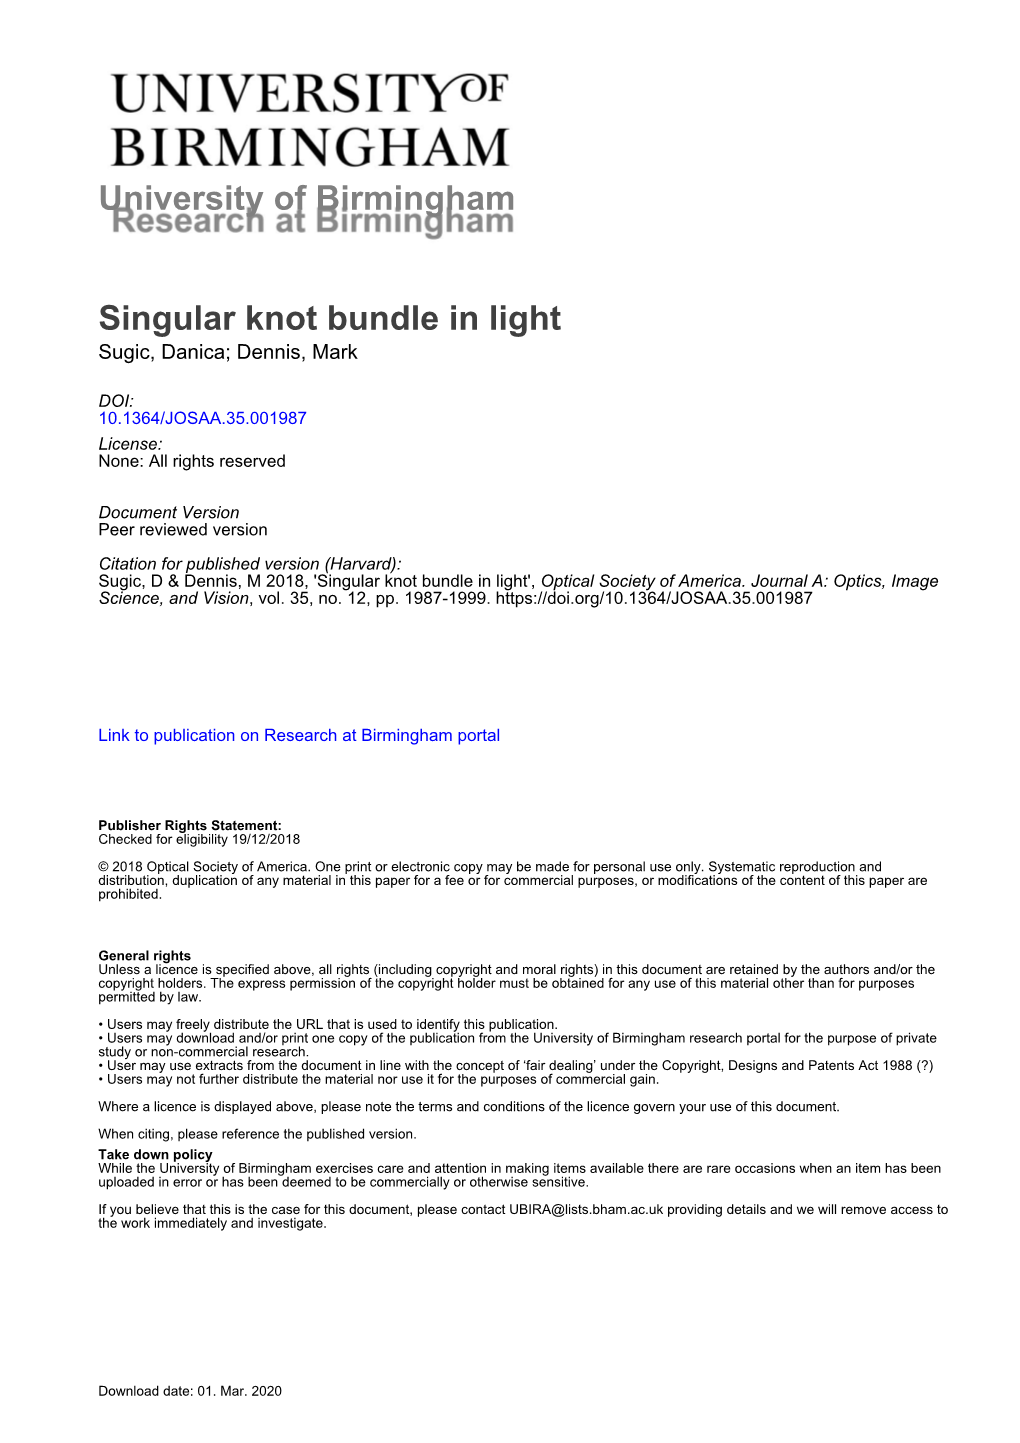 University of Birmingham Singular Knot Bundle in Light